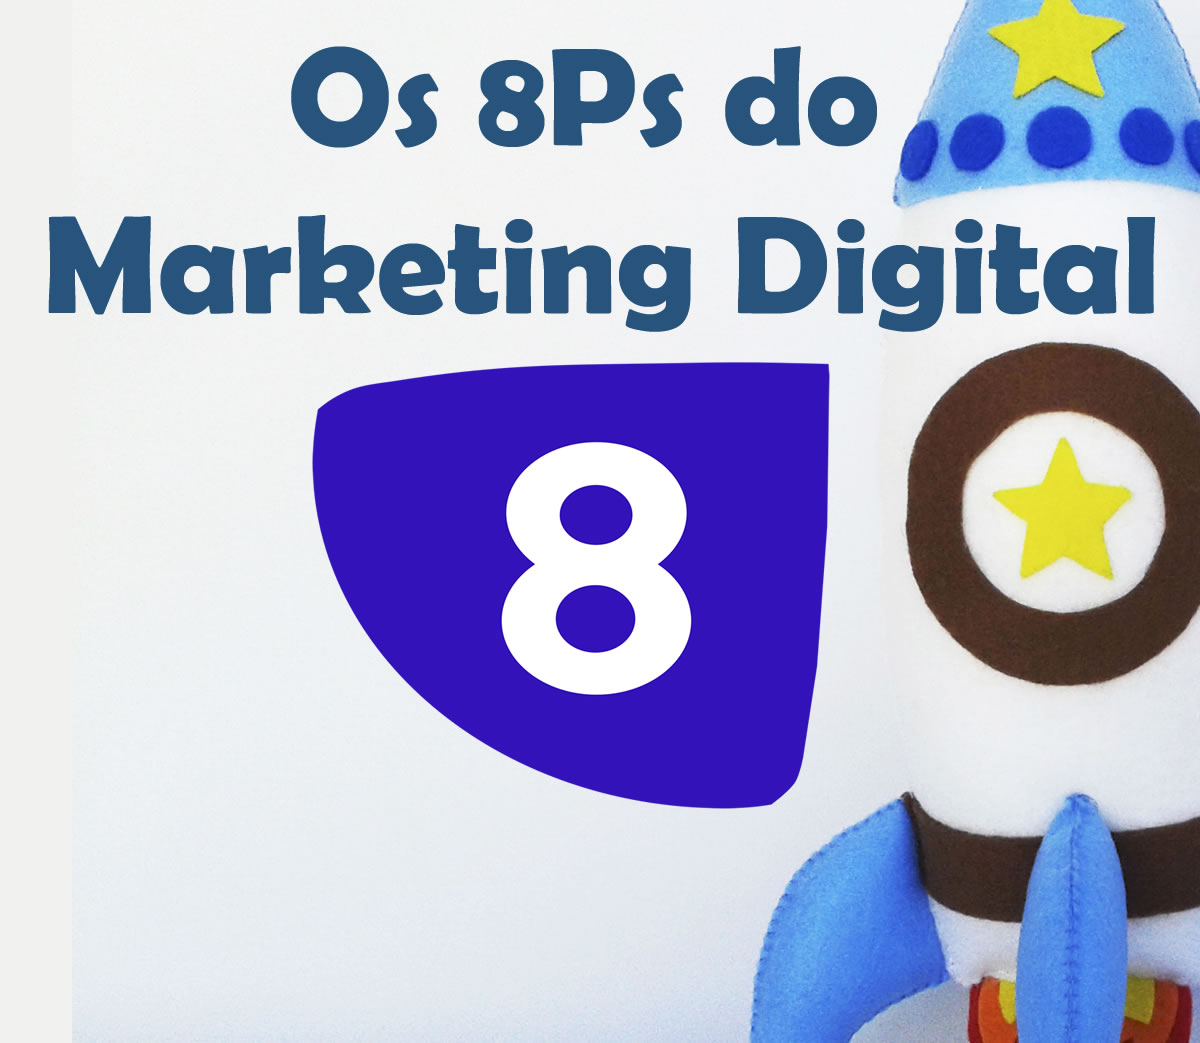 8ps do marketing digital